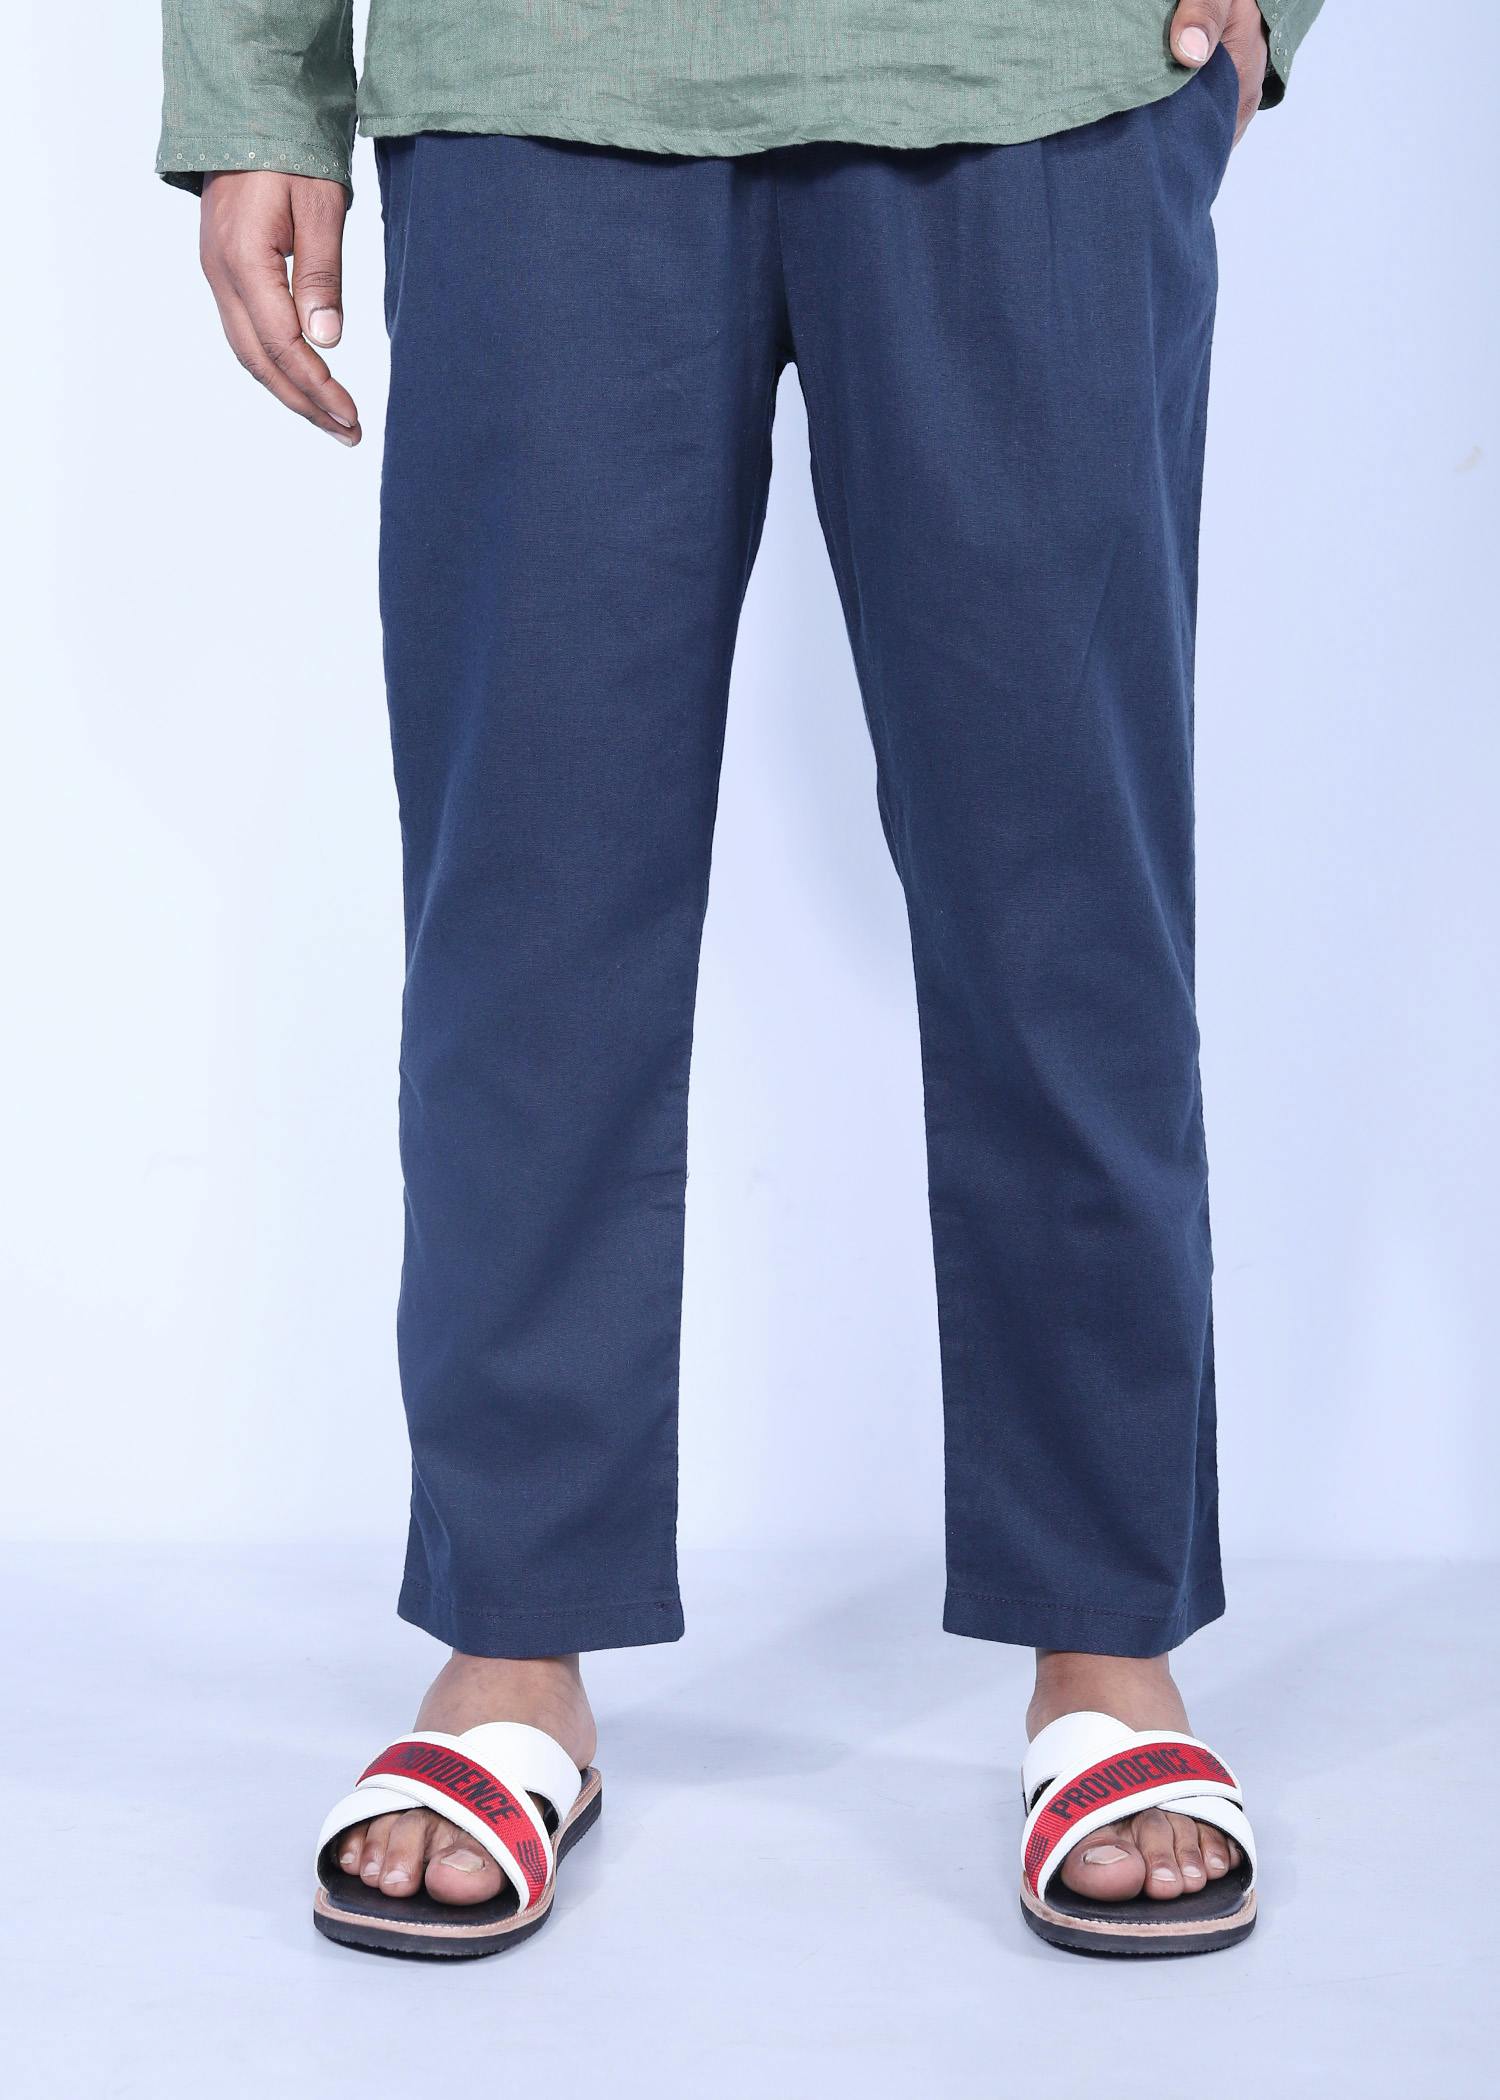 heron iv trouser navy color full half view